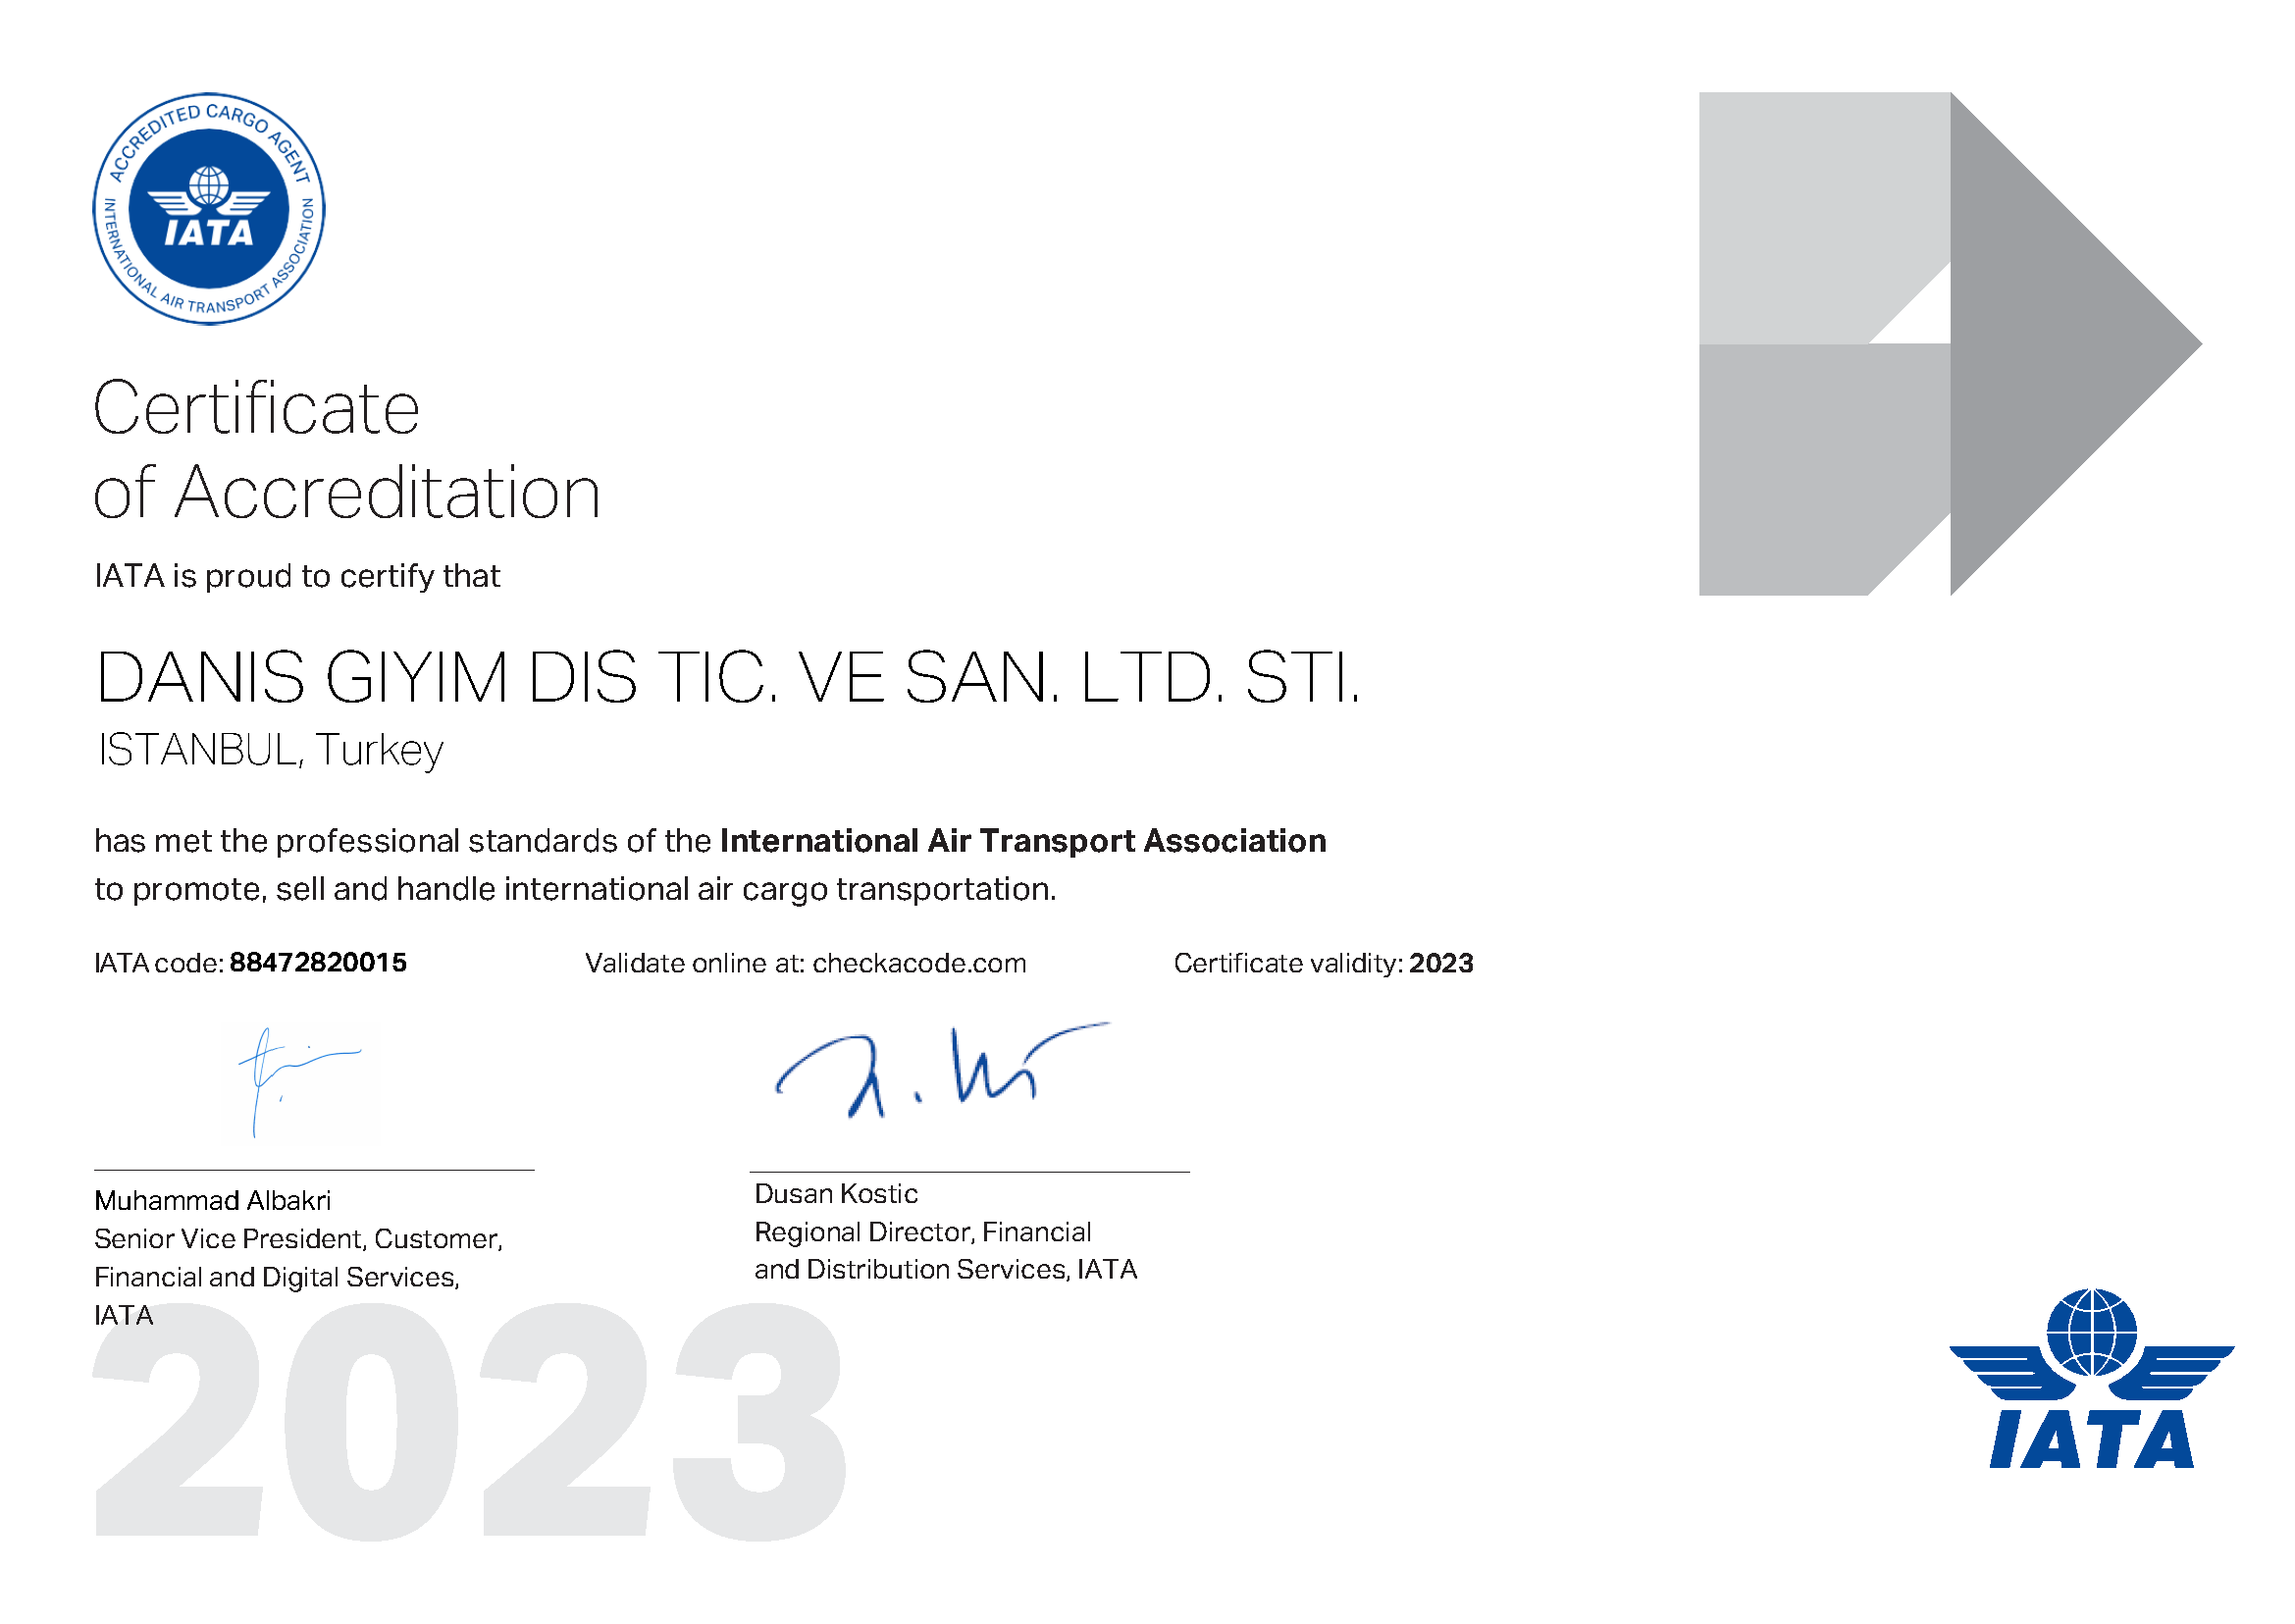 IATA - Certificate of Accreditation